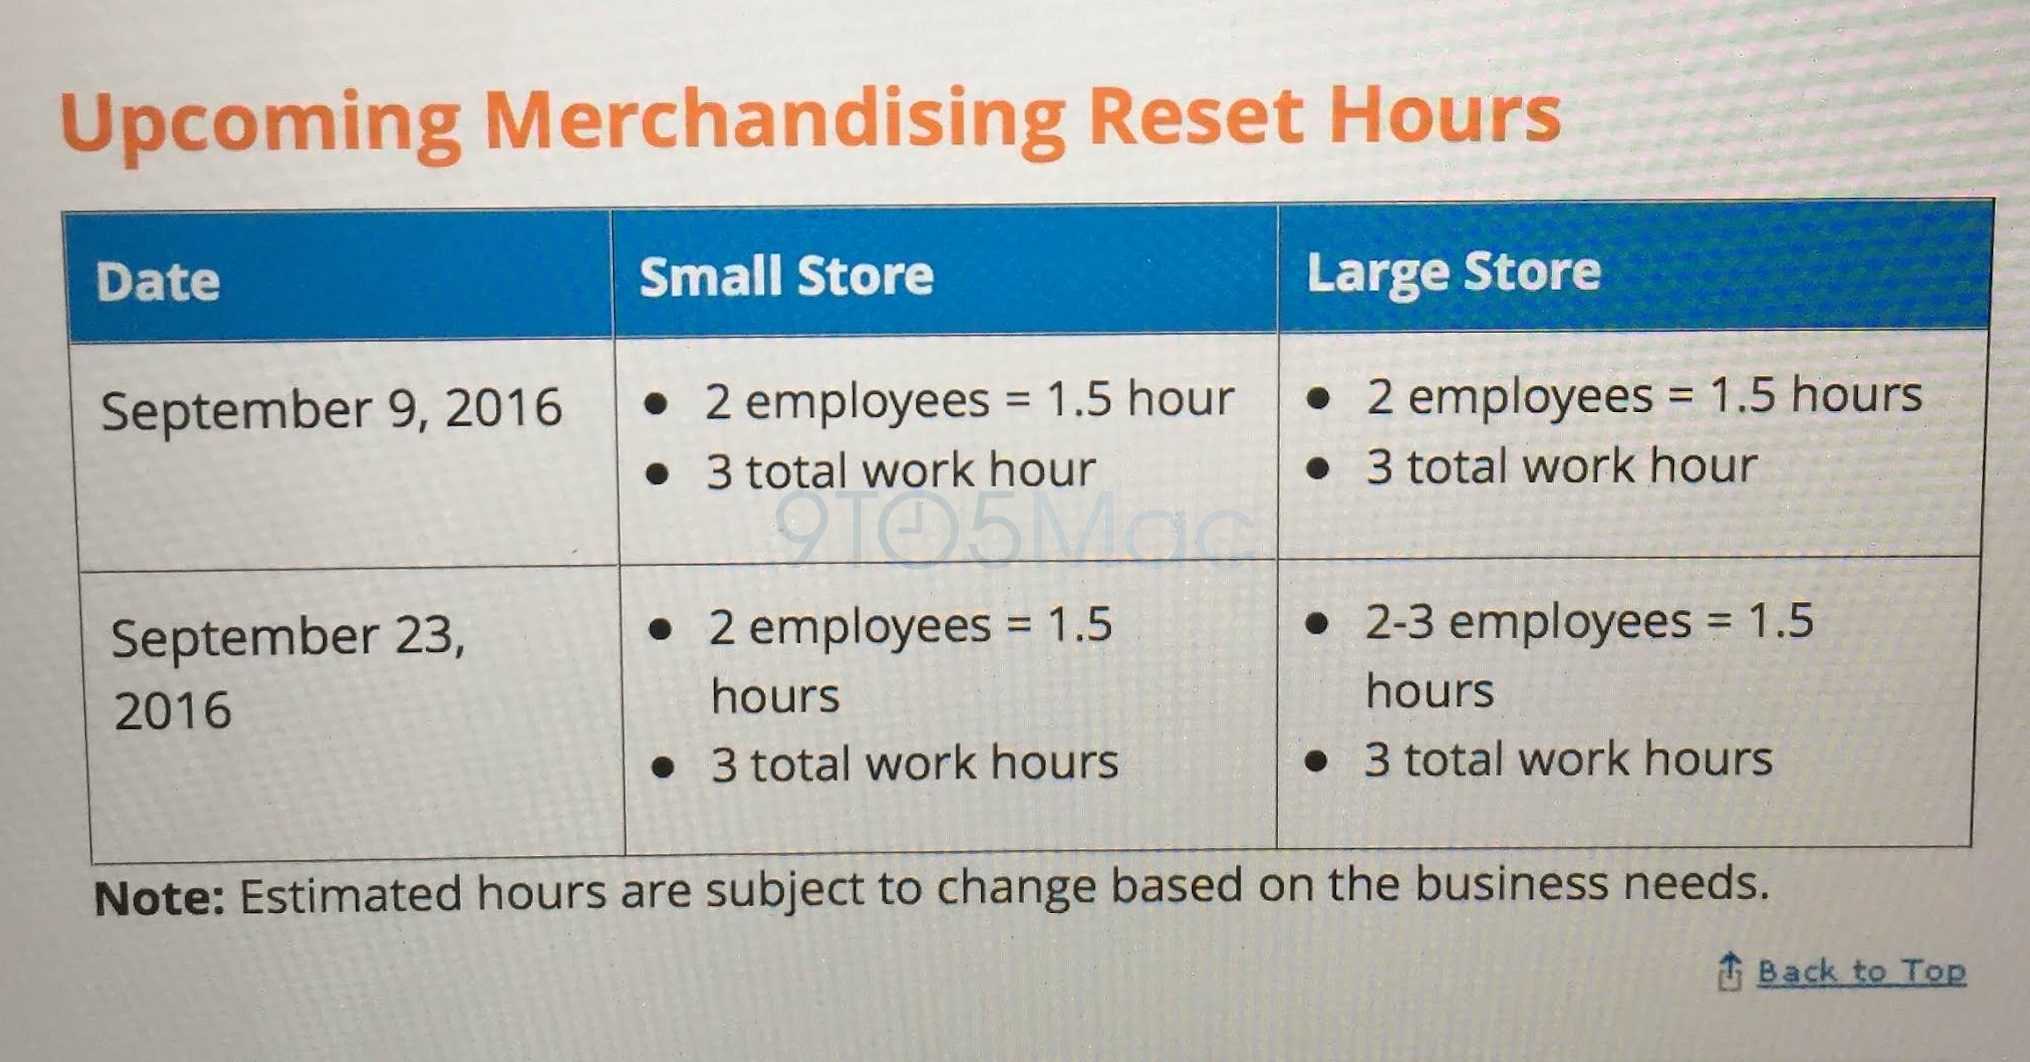 AT&T Merchandising reset